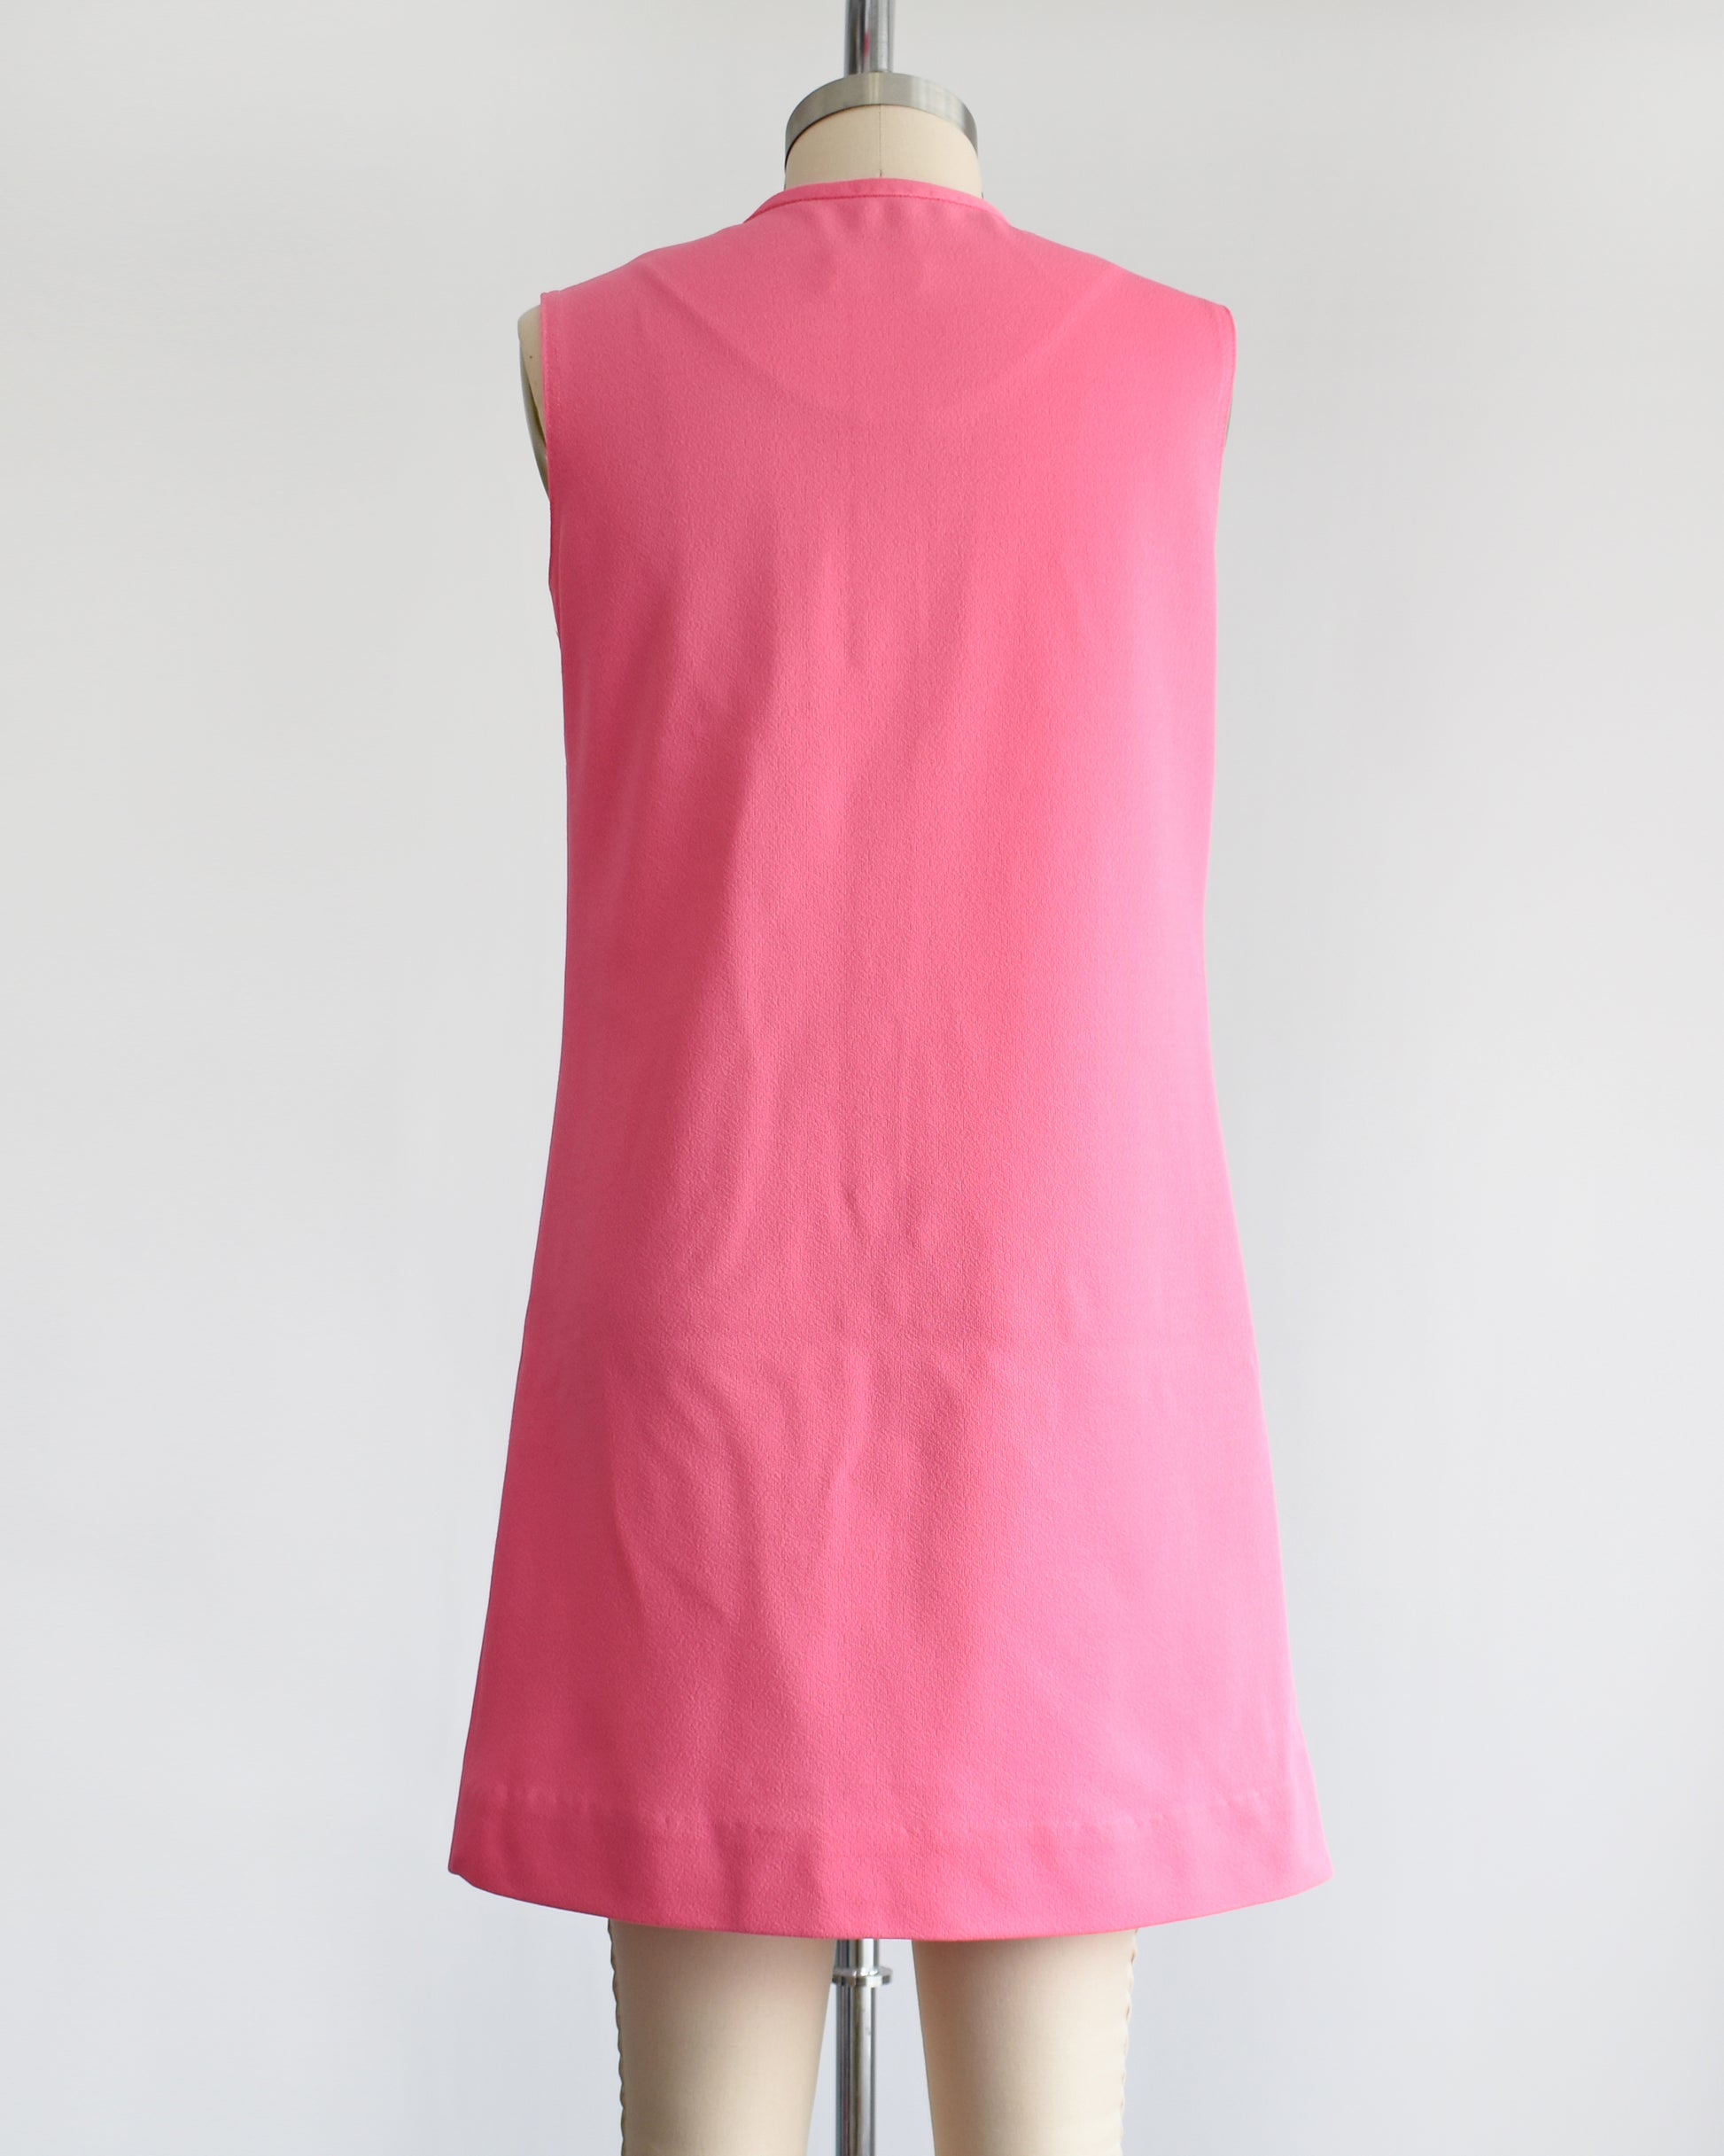 back view of a vintage 1960s pink mod mini dress